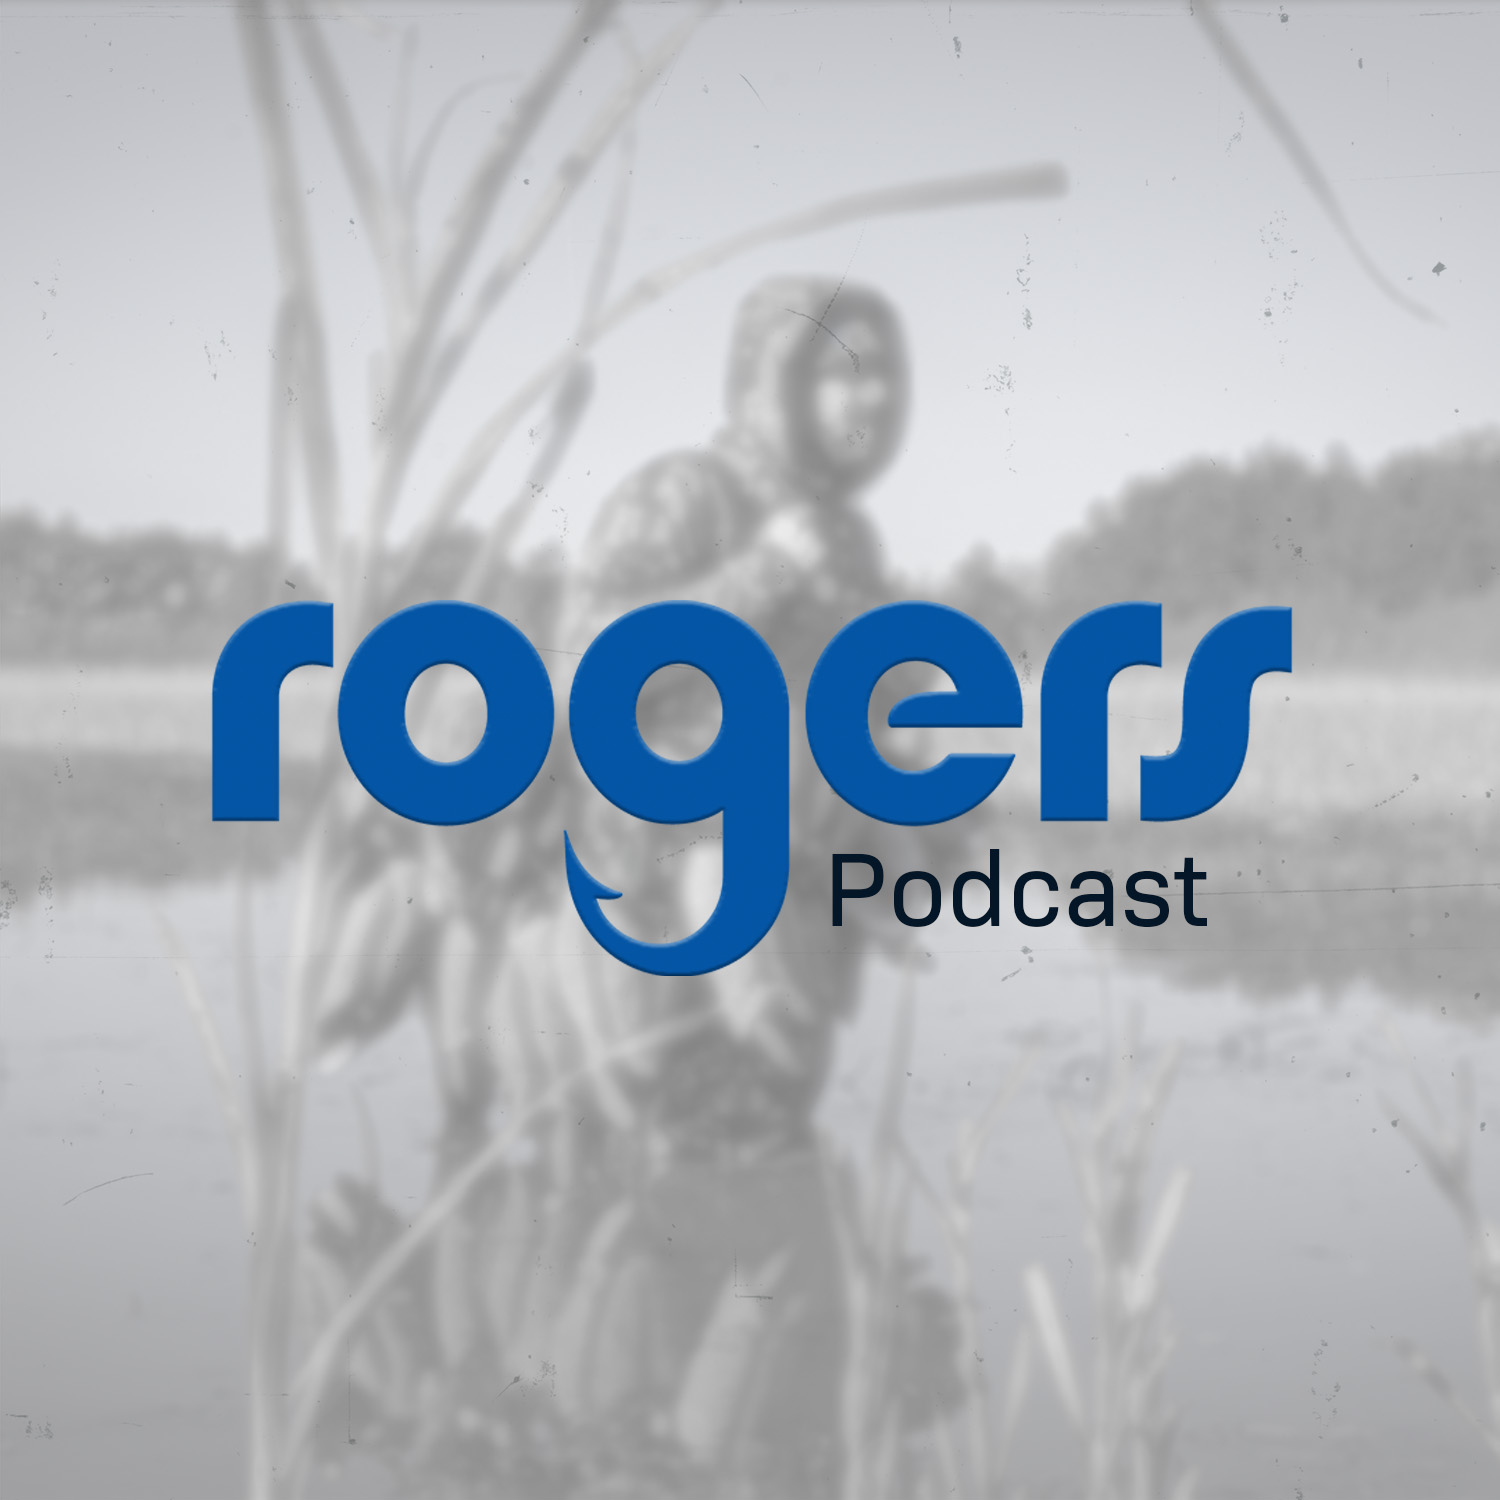 Artwork for podcast Rogers Podcast